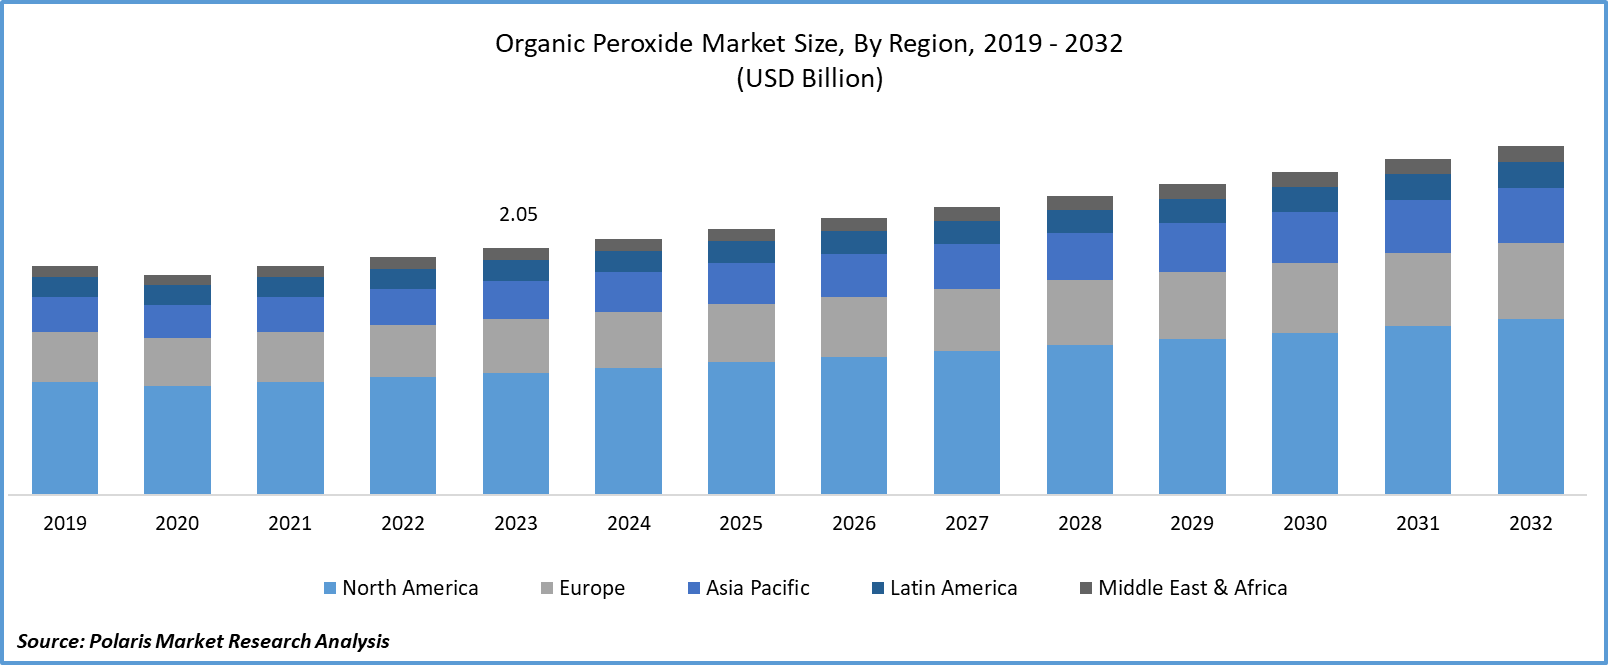 Organic Peroxide Market Size